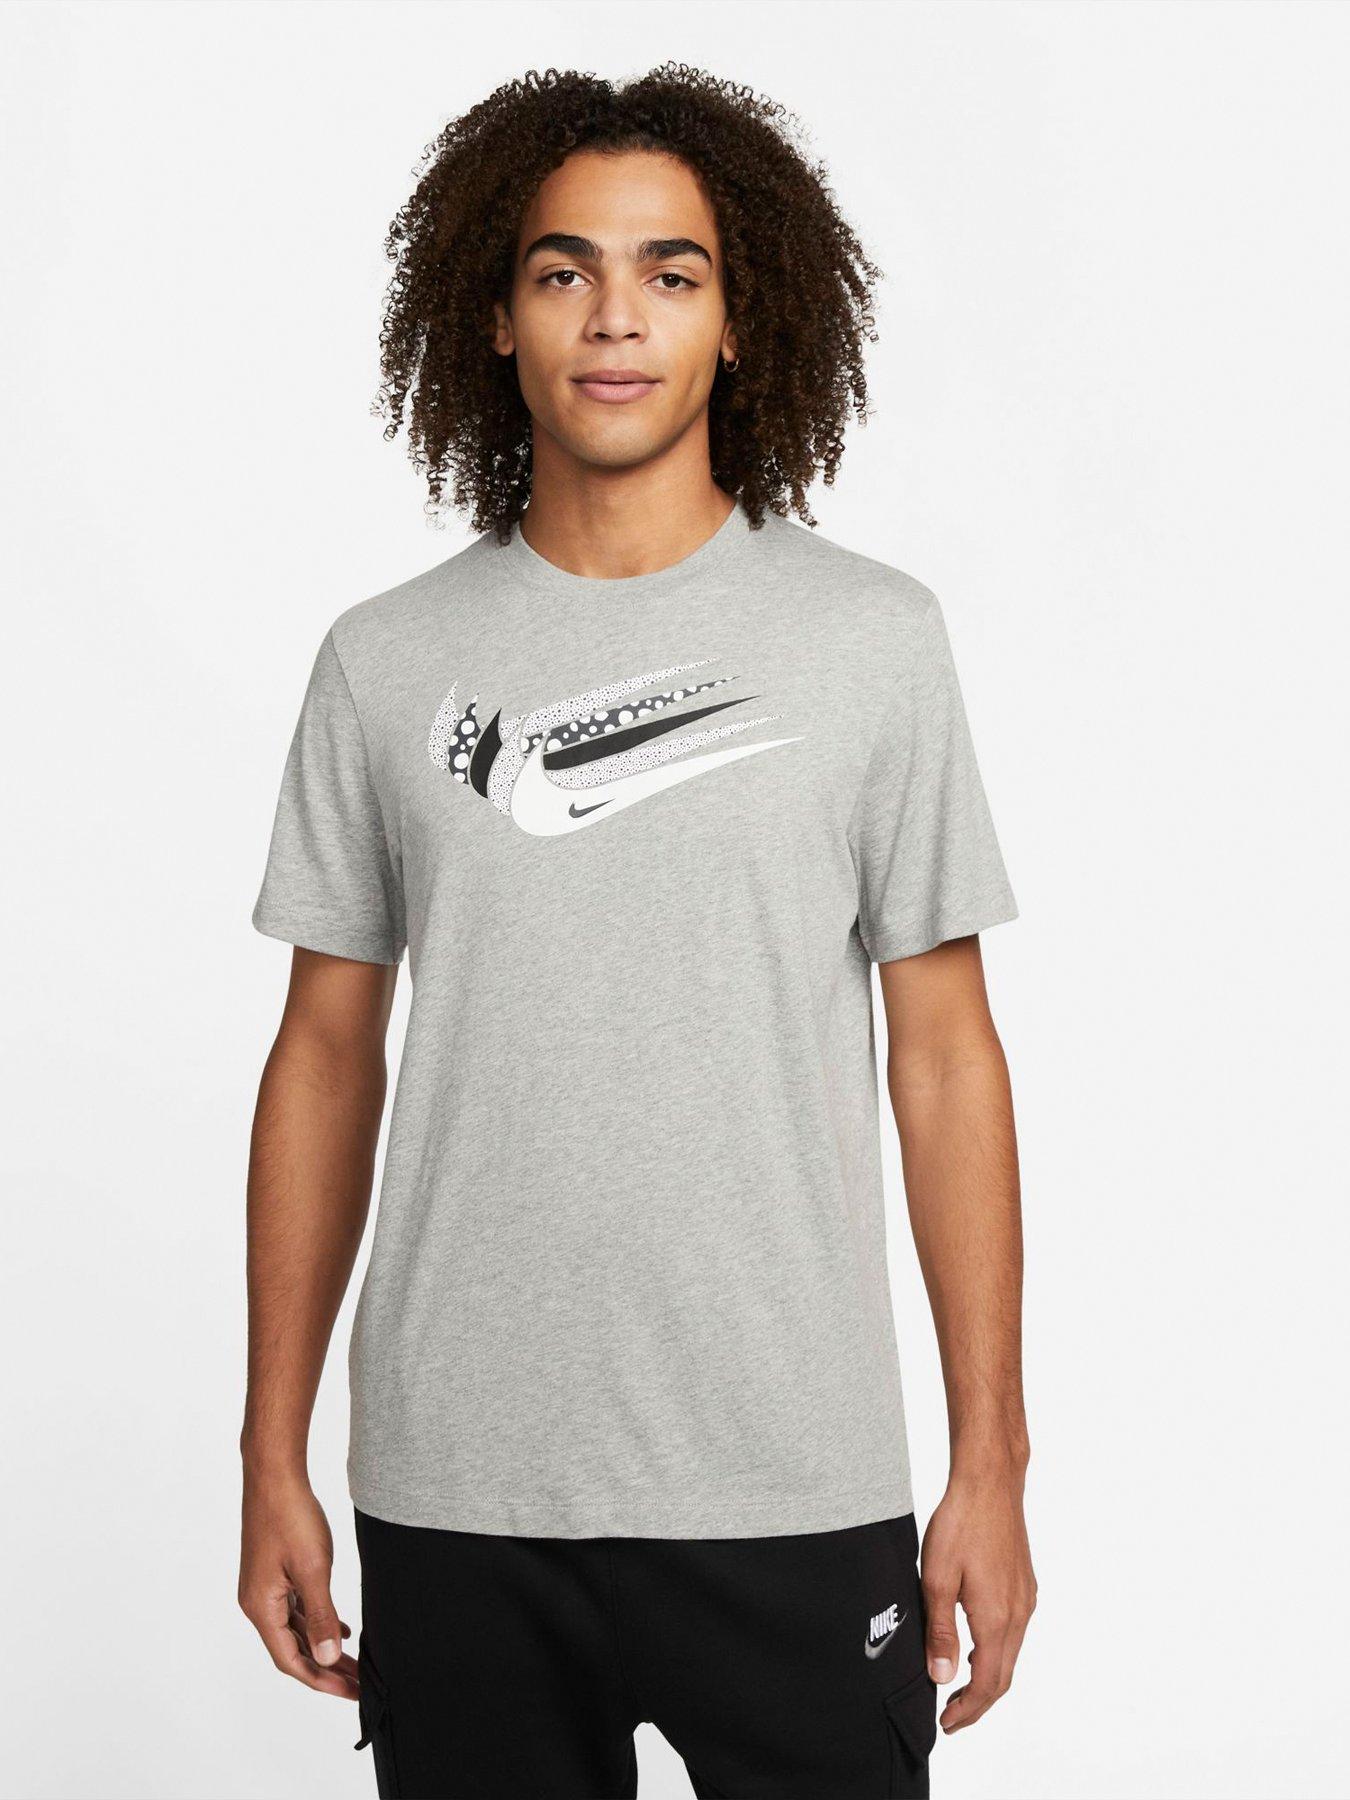  NSW 2 Month Multi Swoosh T-Shirt (Plus Size) - Grey/White